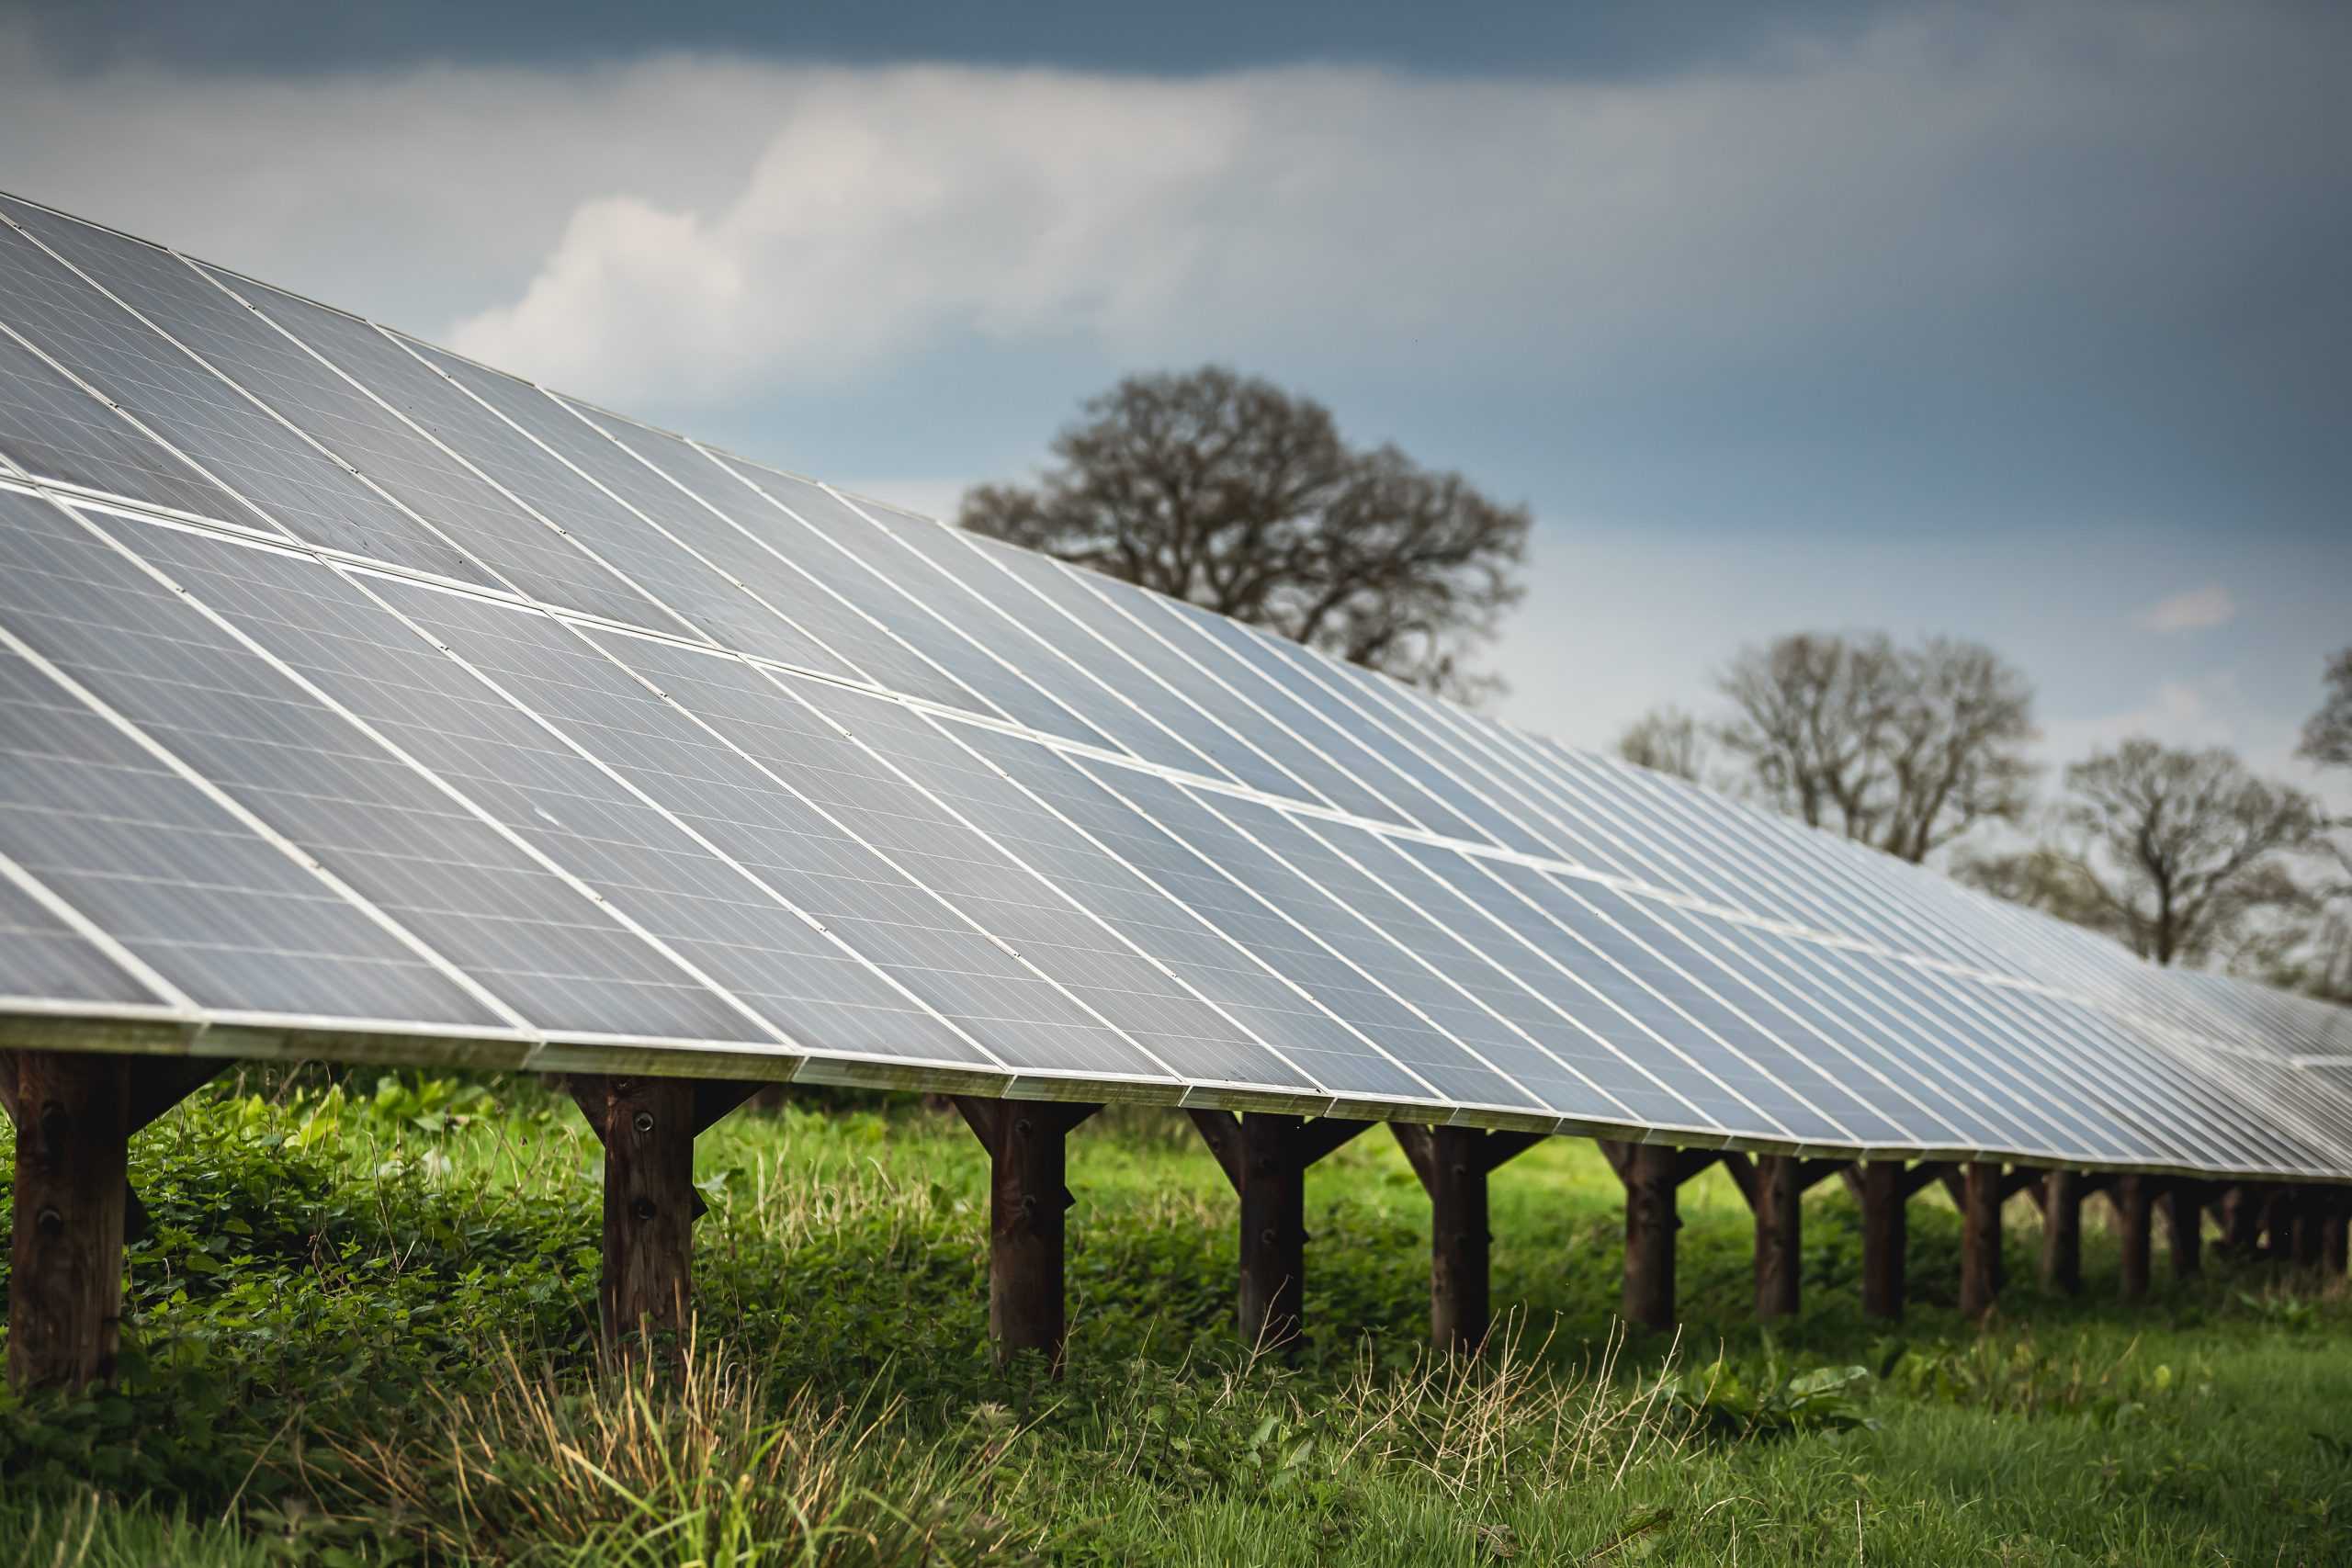 Solar panels in grass field